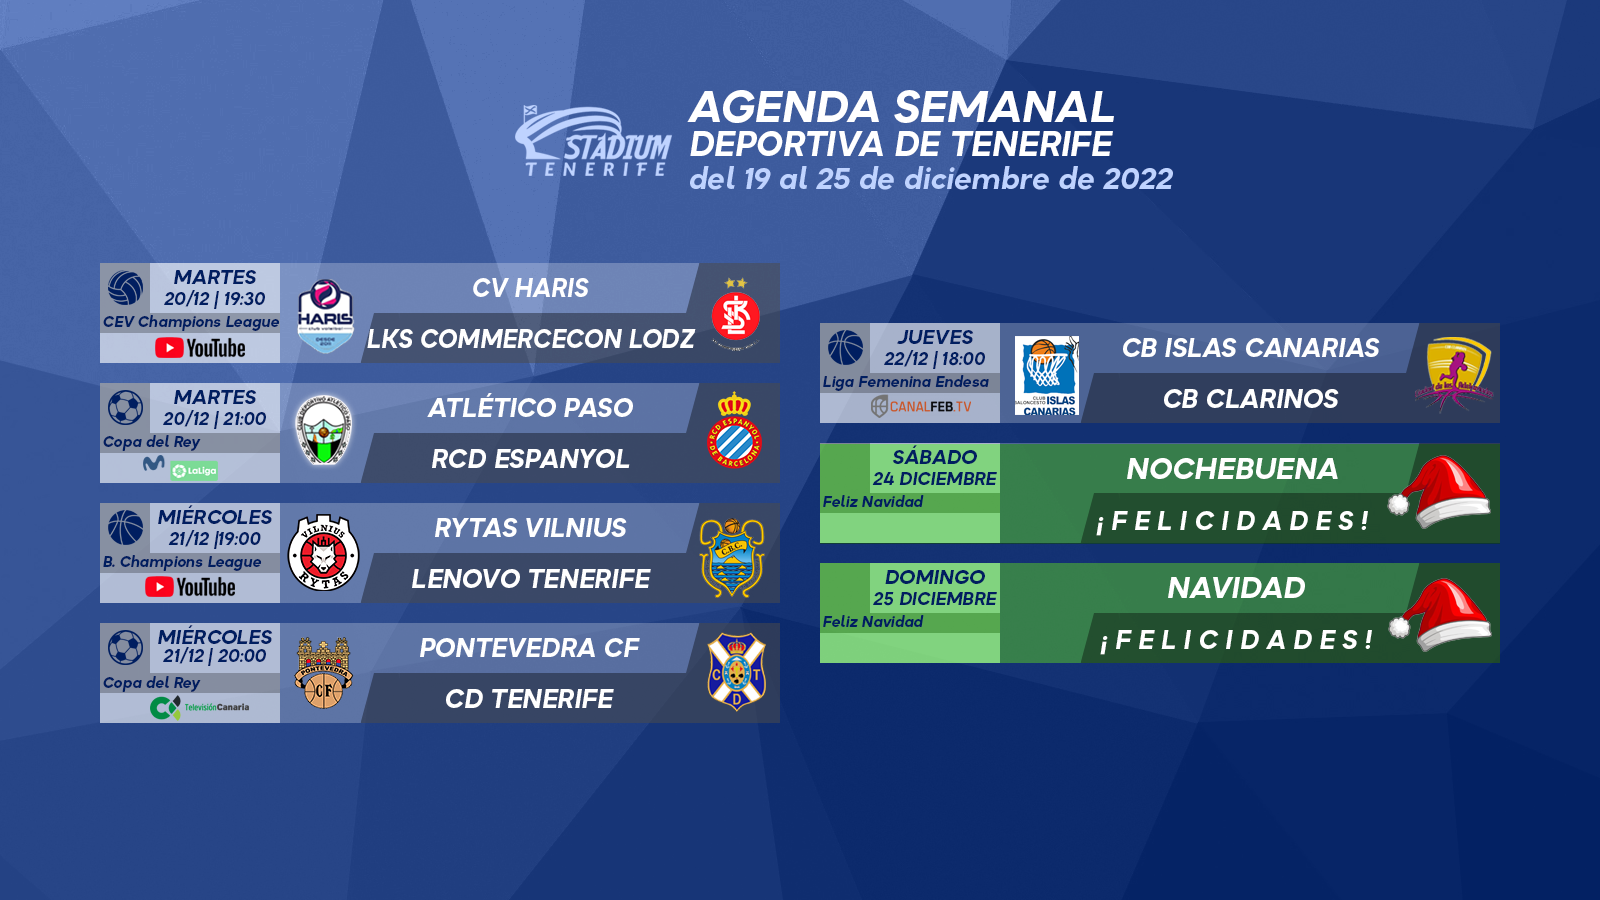 Agenda Semanal Deportiva de Tenerife (19 al 25 de diciembre)